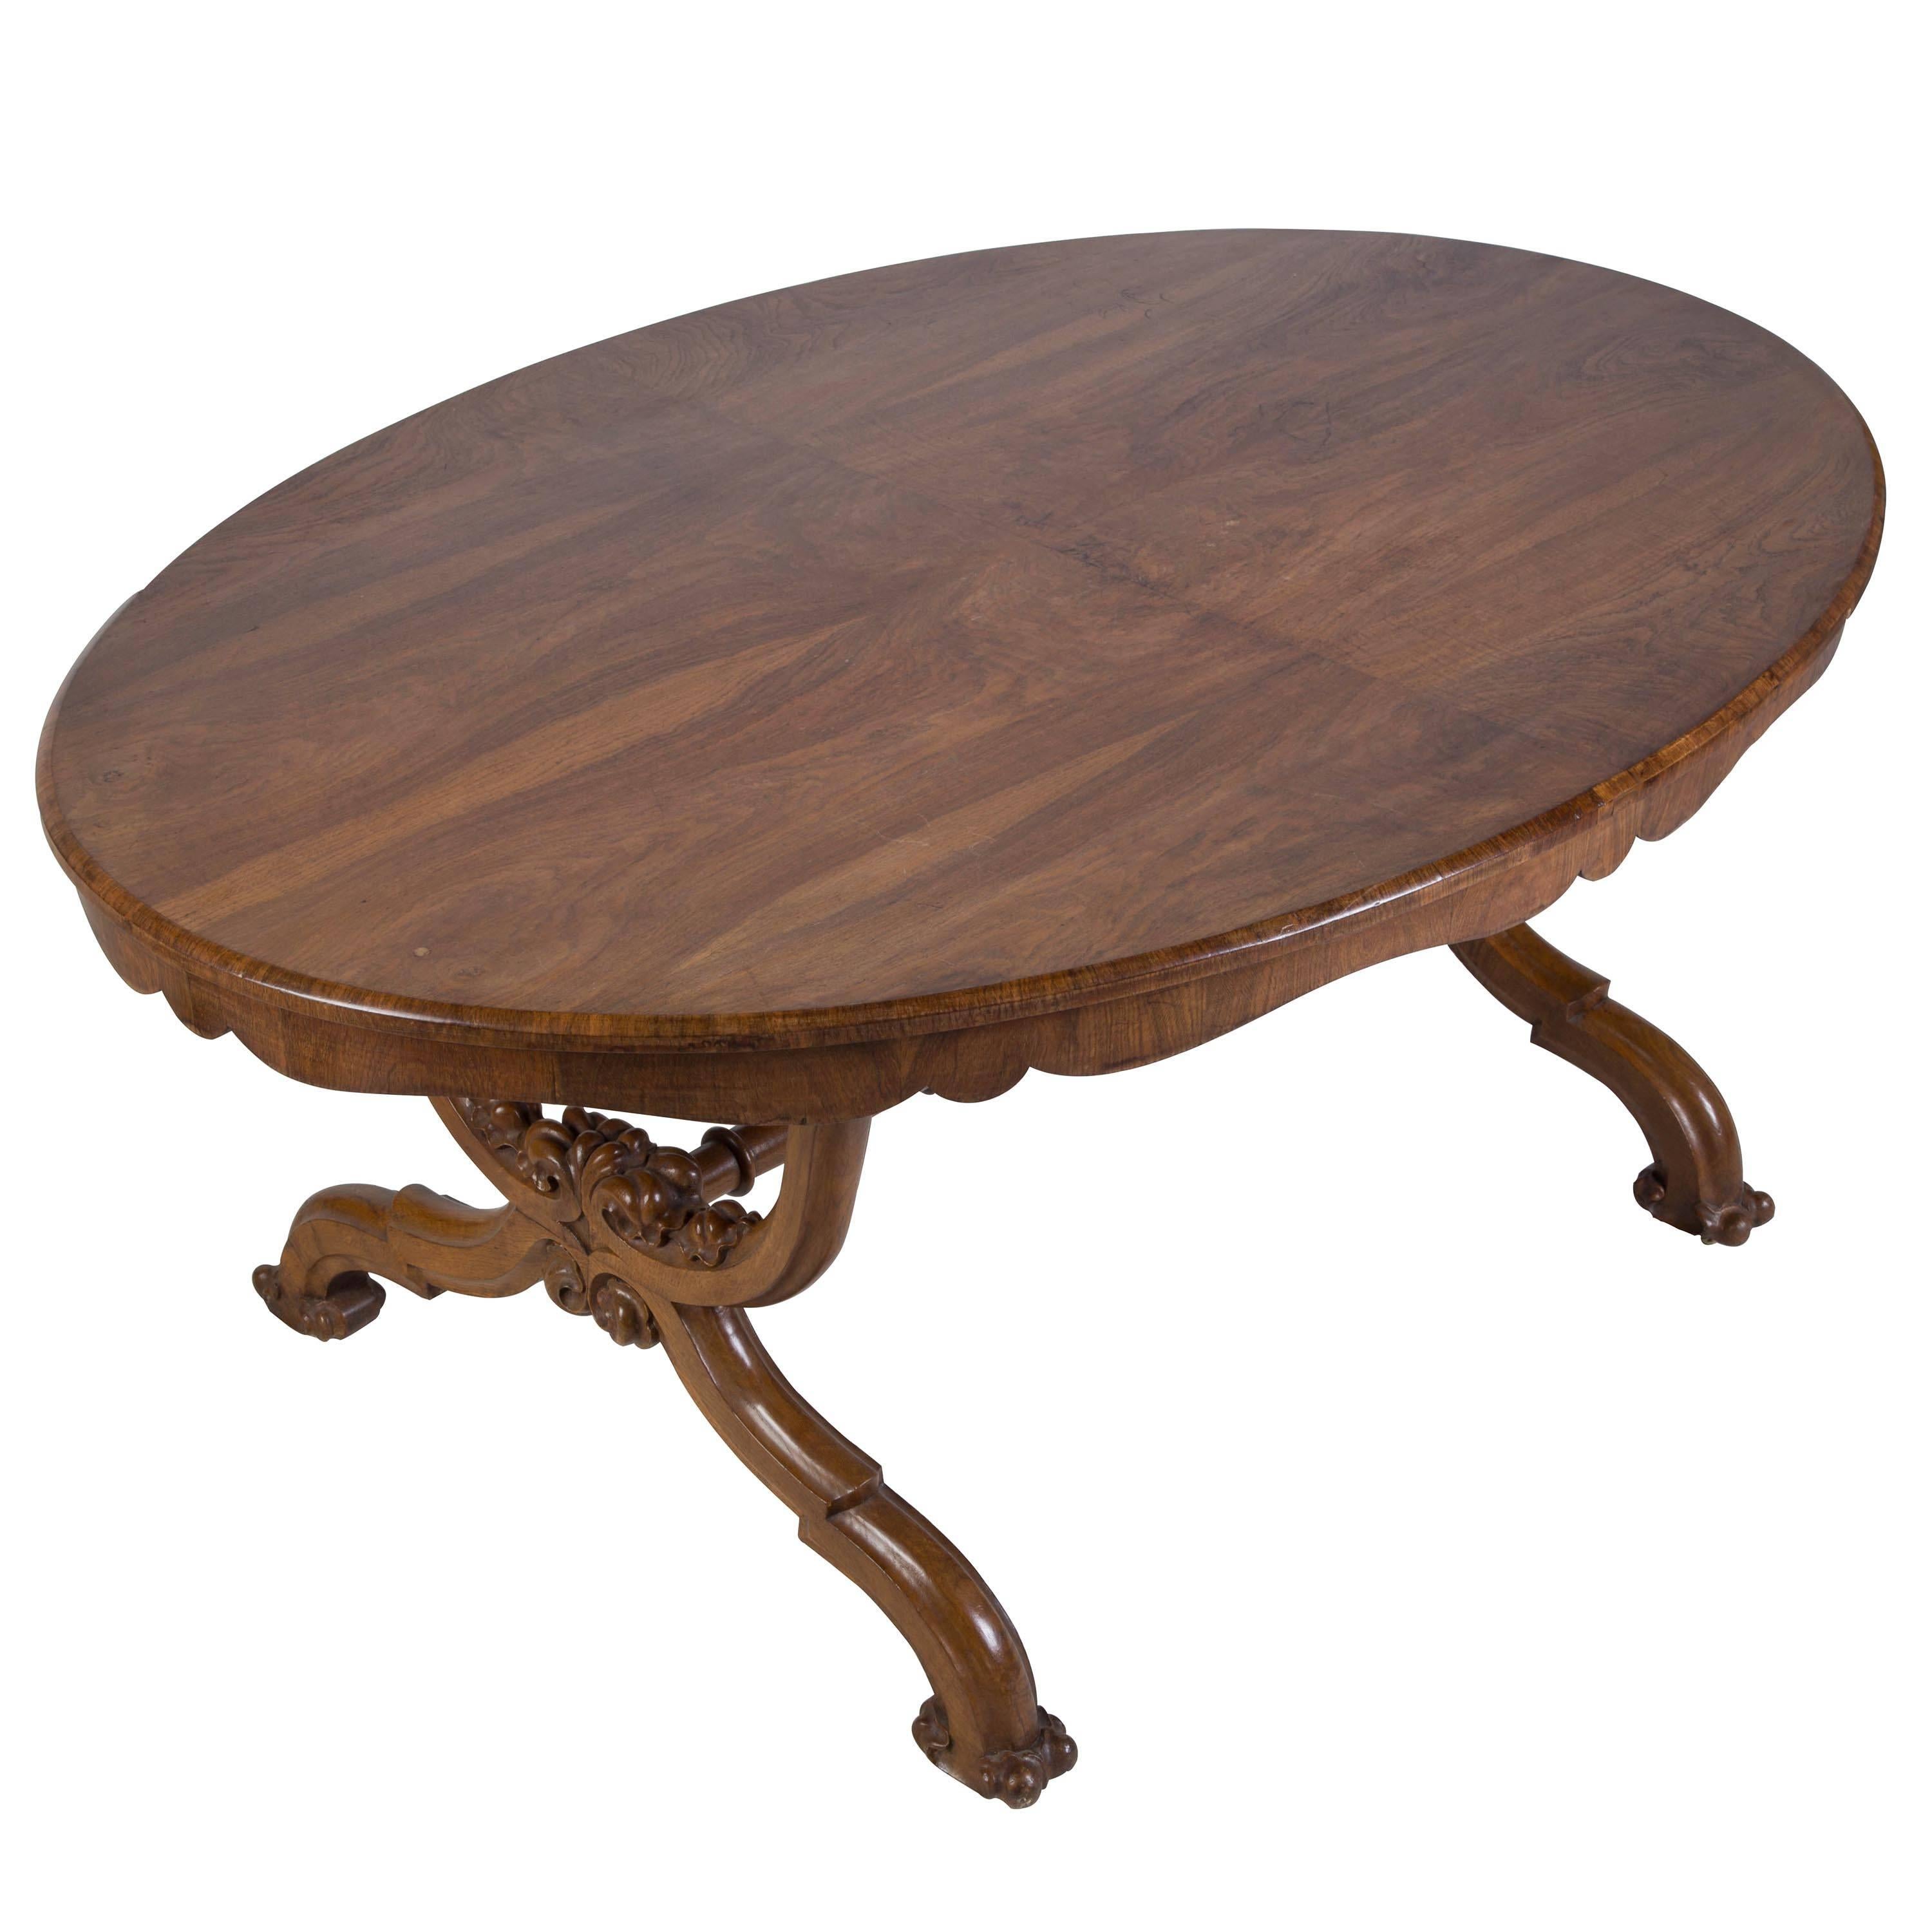 Irish centre table veneered in oak, circa 1830.